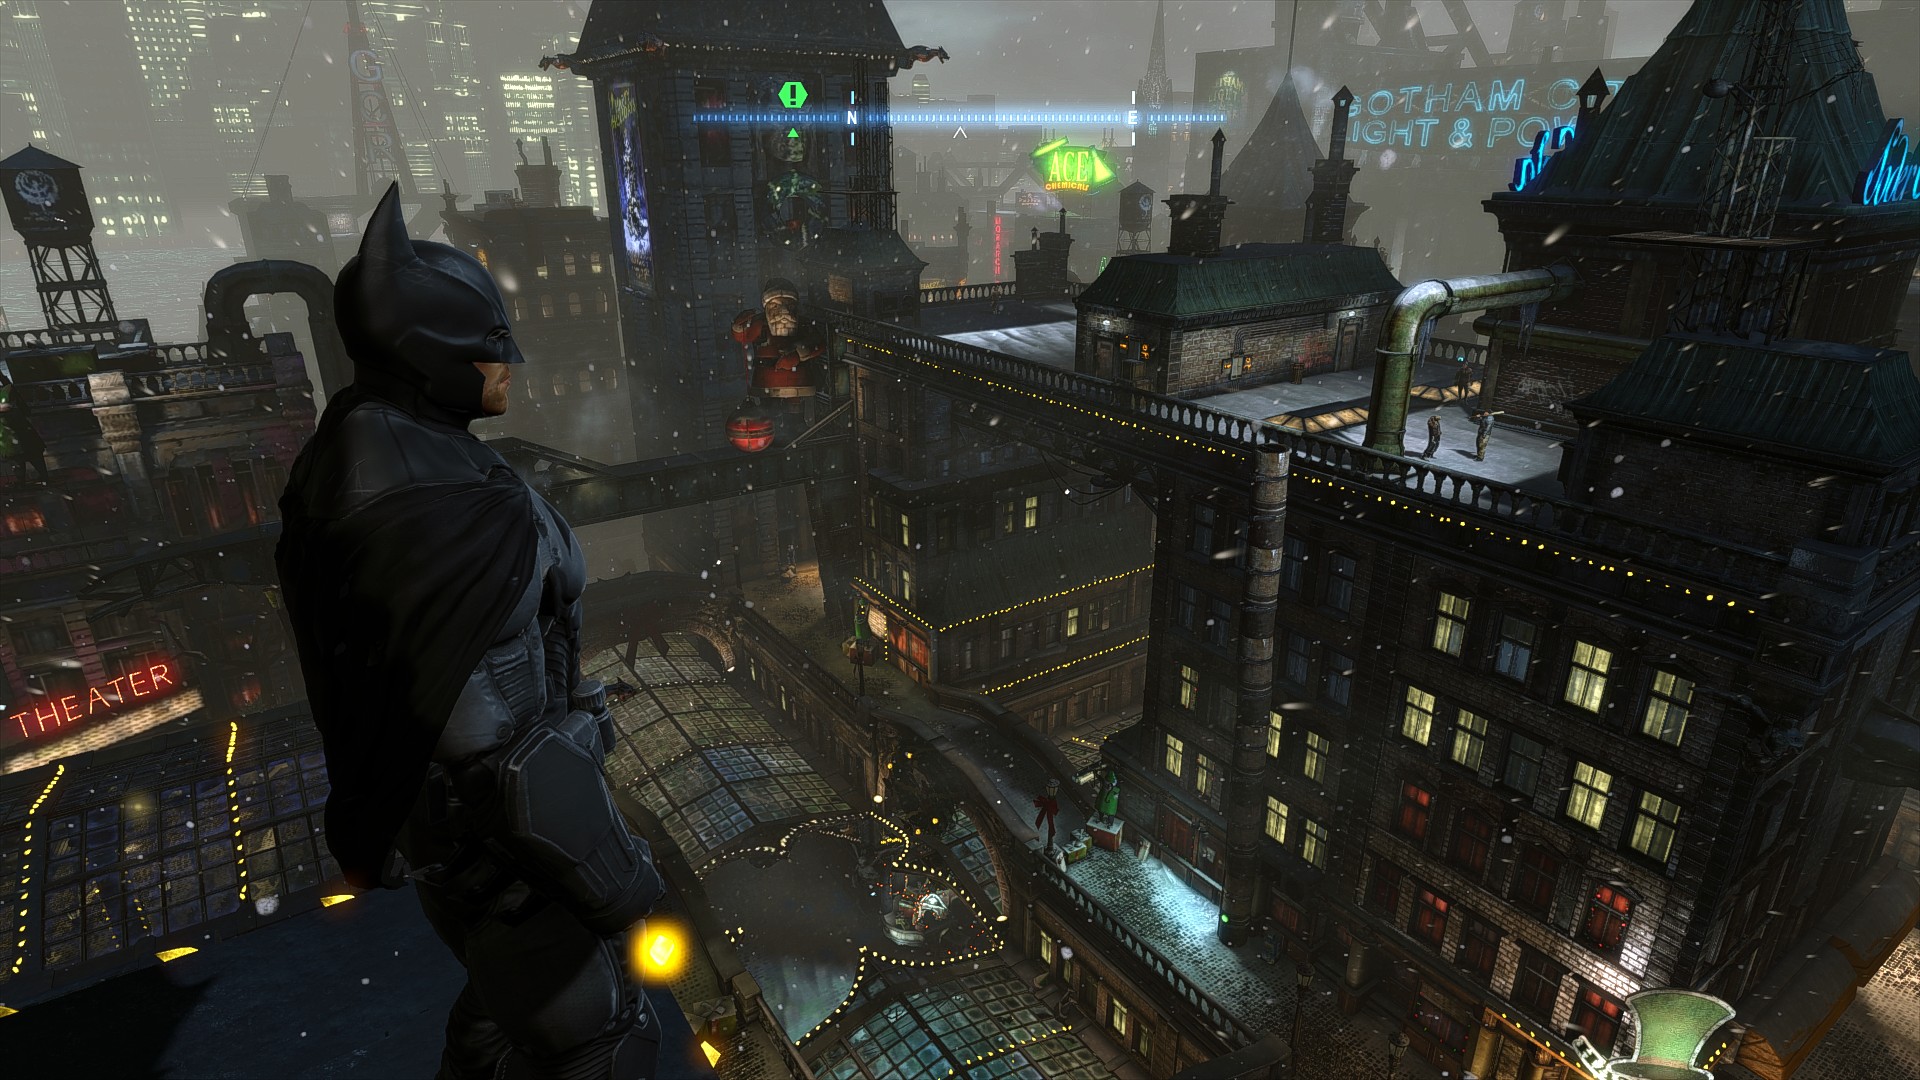 batman arkham city graphics mod